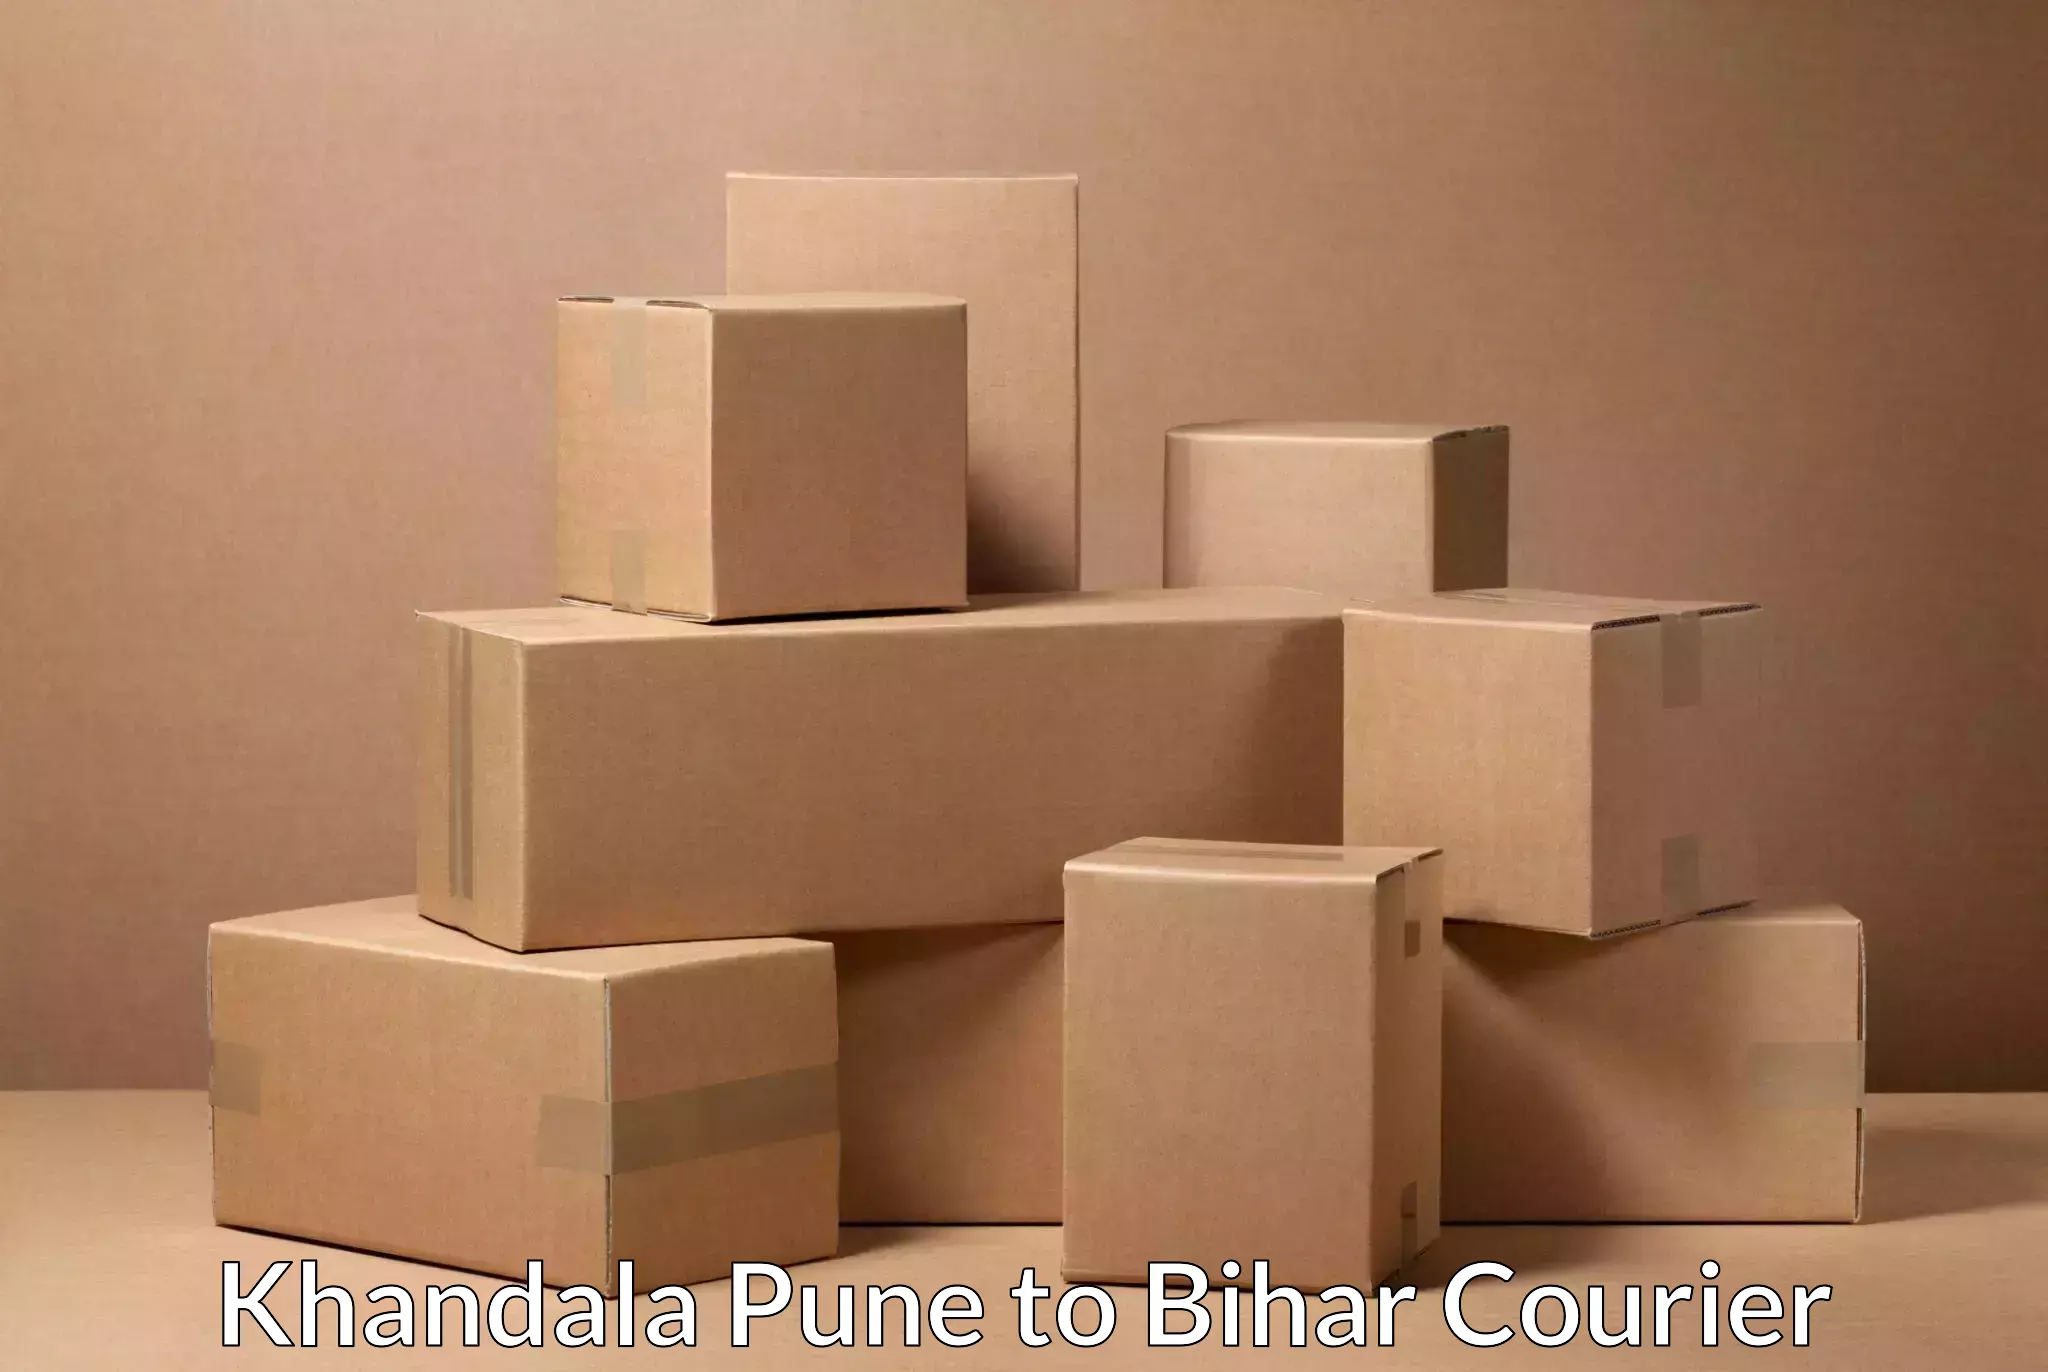 Urgent courier needs Khandala Pune to Bankipore